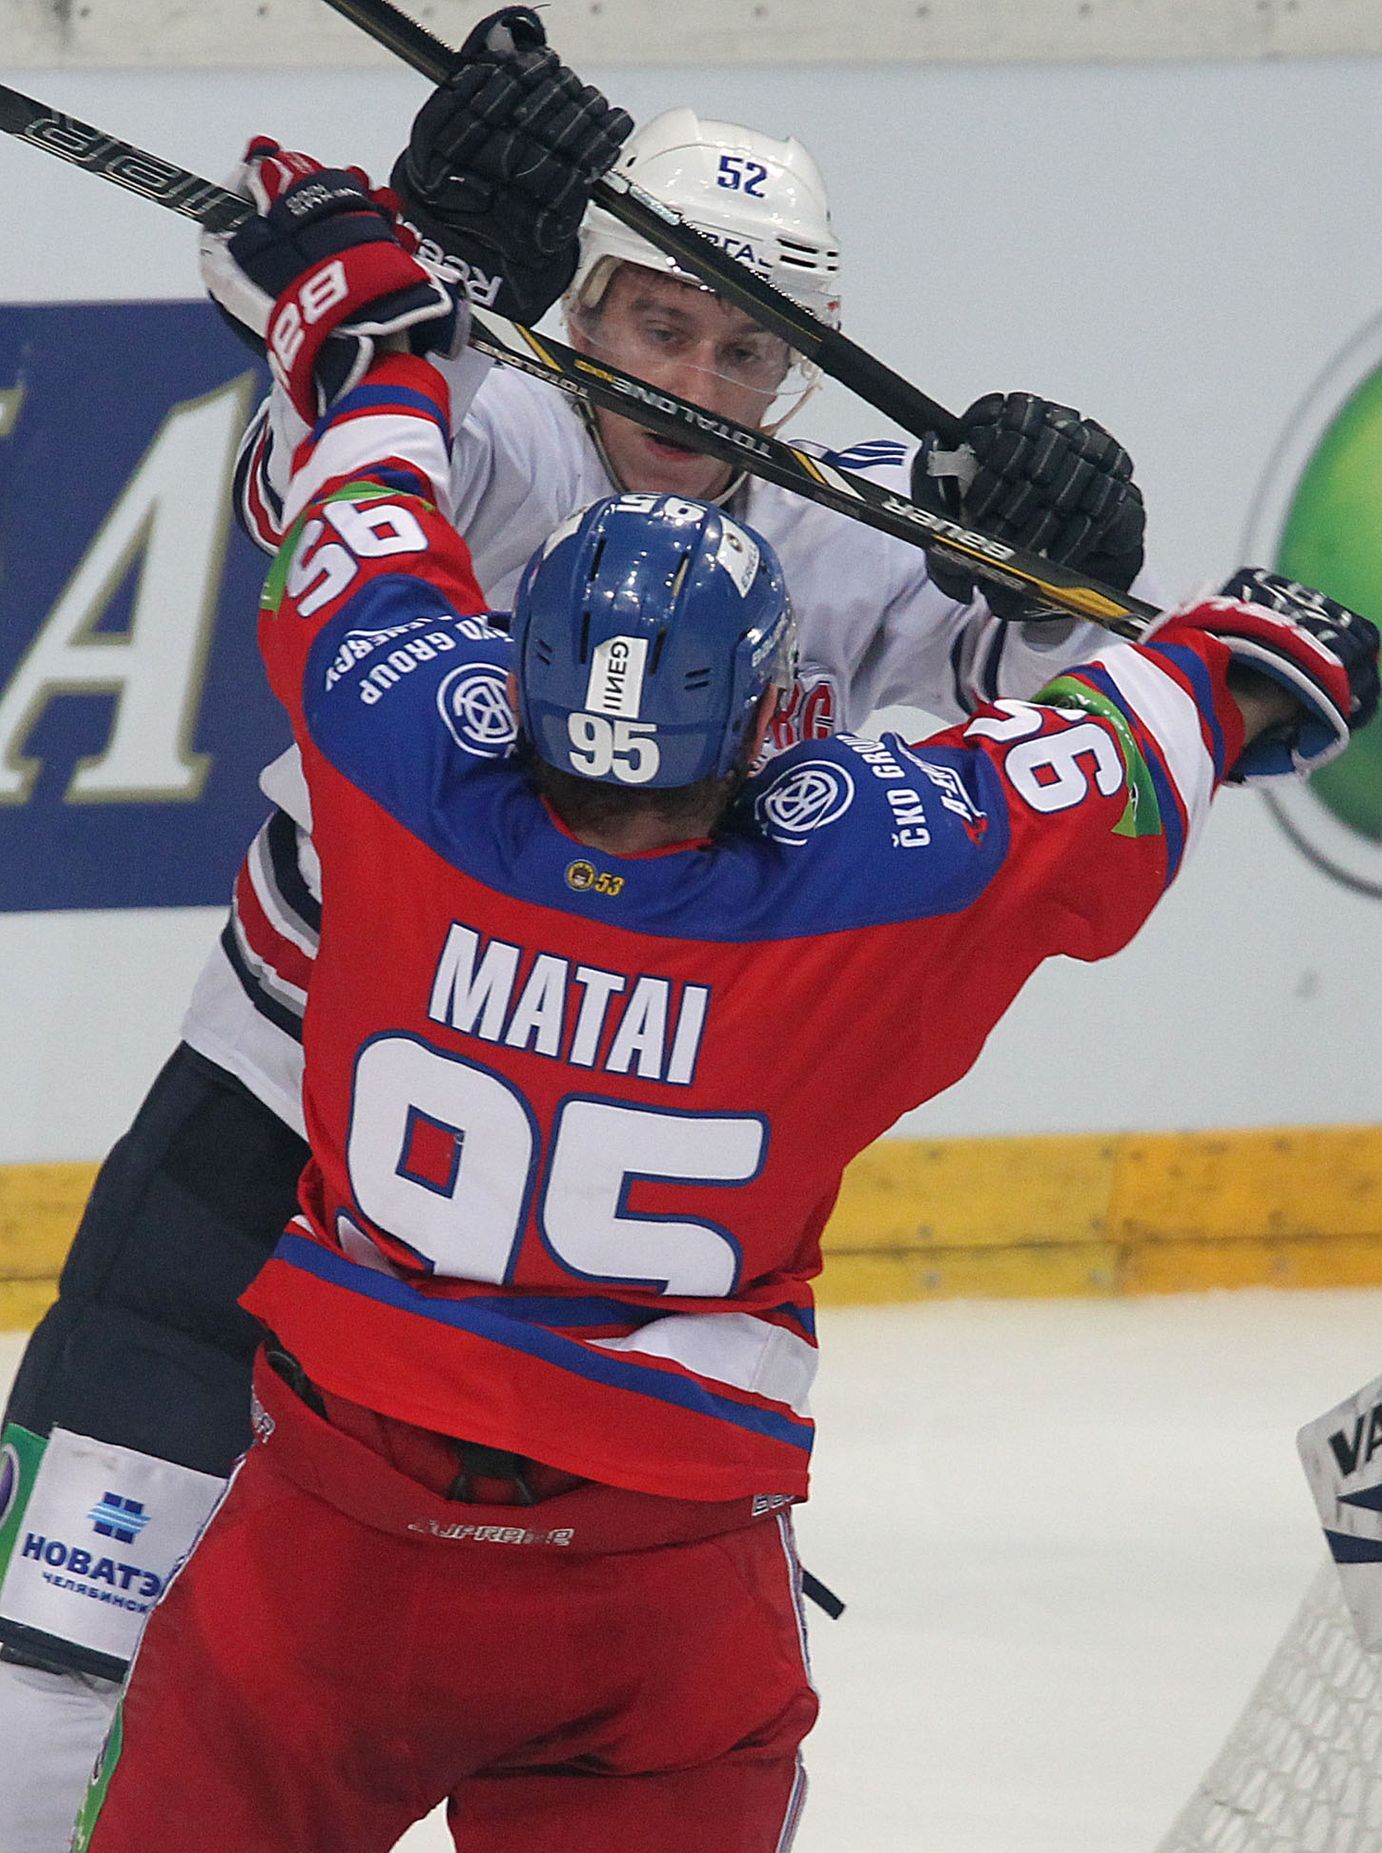 Finále KHL, Lev-Magnitogorsk: Jakub Matai (95) - Sergej Těreščenko (52)